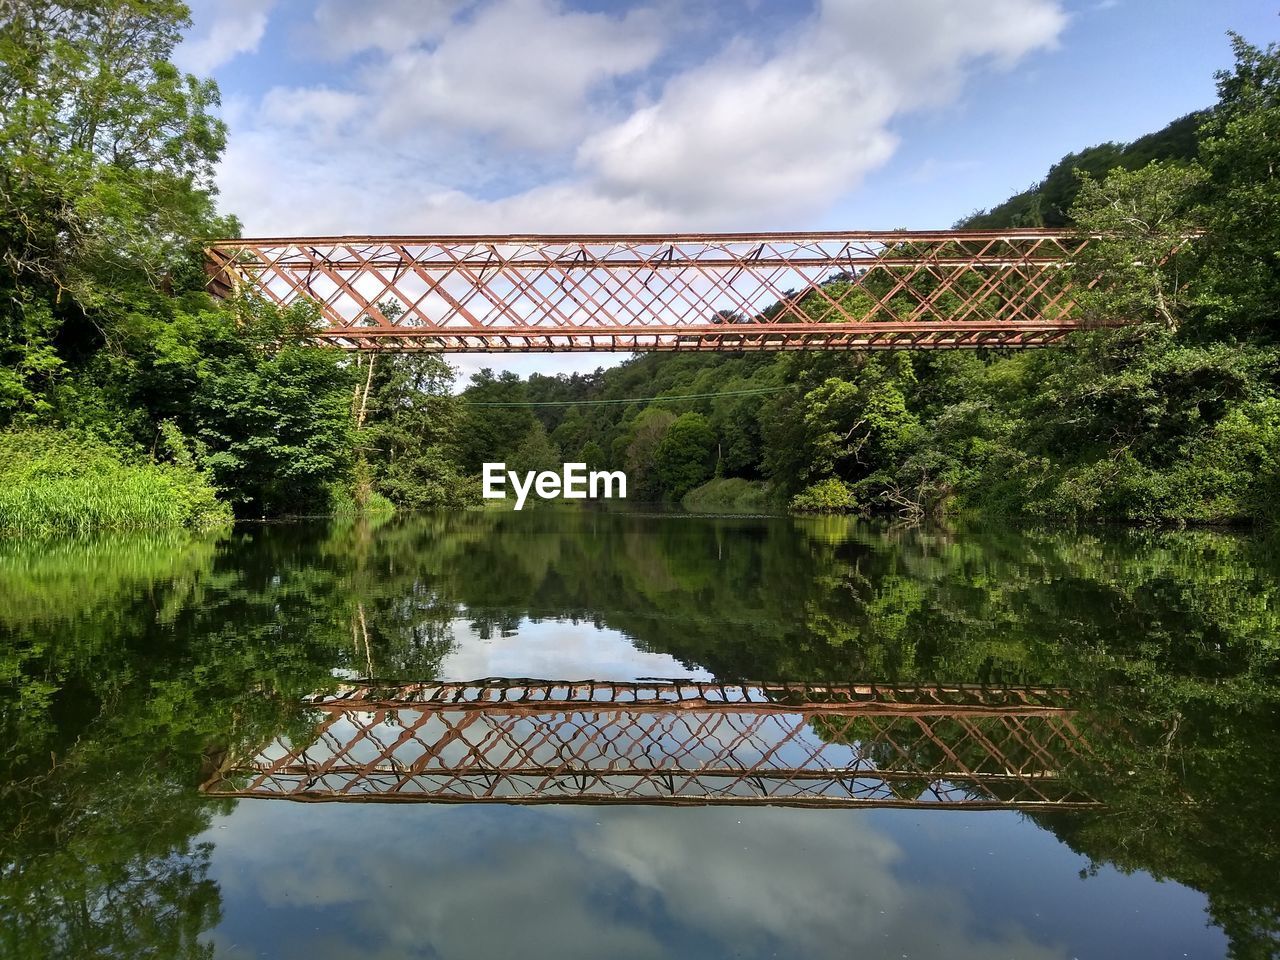 REFLECTION OF BRIDGE ON LAKE AGAINST SKY